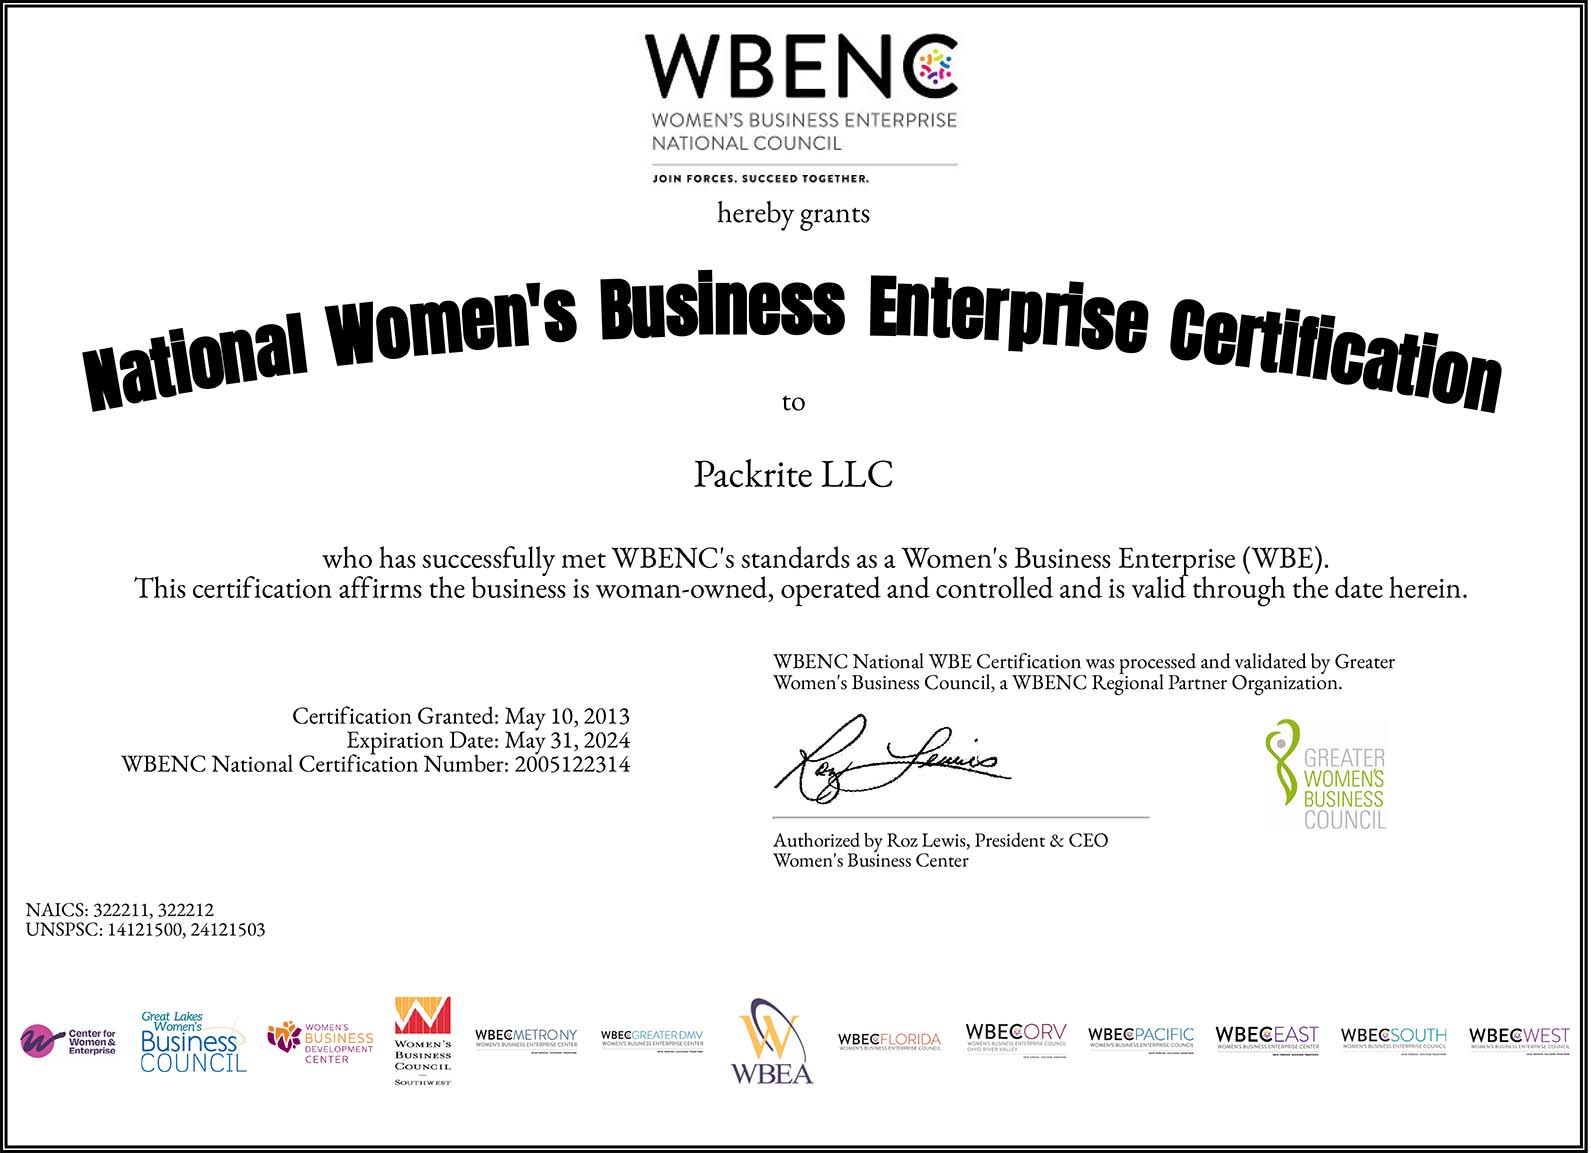 Women Business Enterprise National Council (WBENC) Certifies Packrite, LLC as a Woman Owned Business Enterprise.